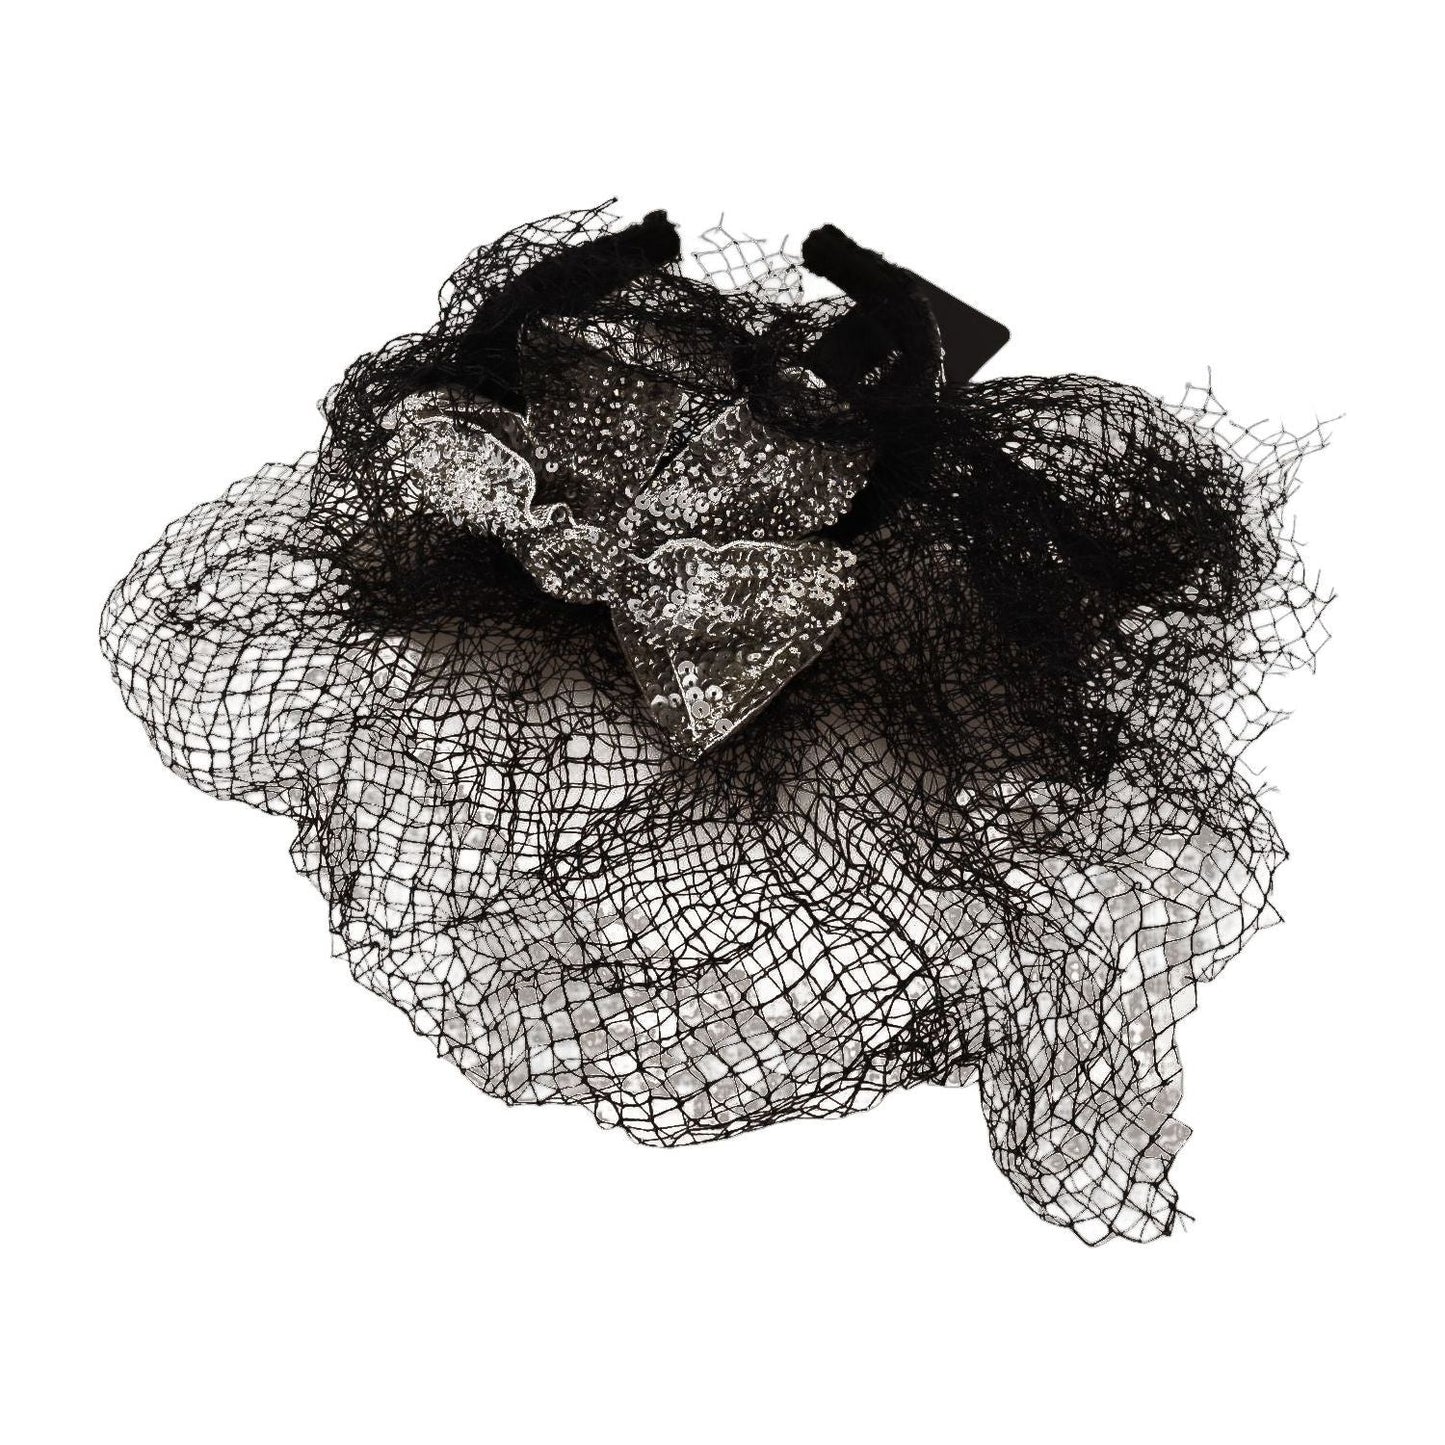 Dolce & Gabbana Glamorous Black Sequined Designer Diadem black-logo-sequined-fascinator-diadem-headband